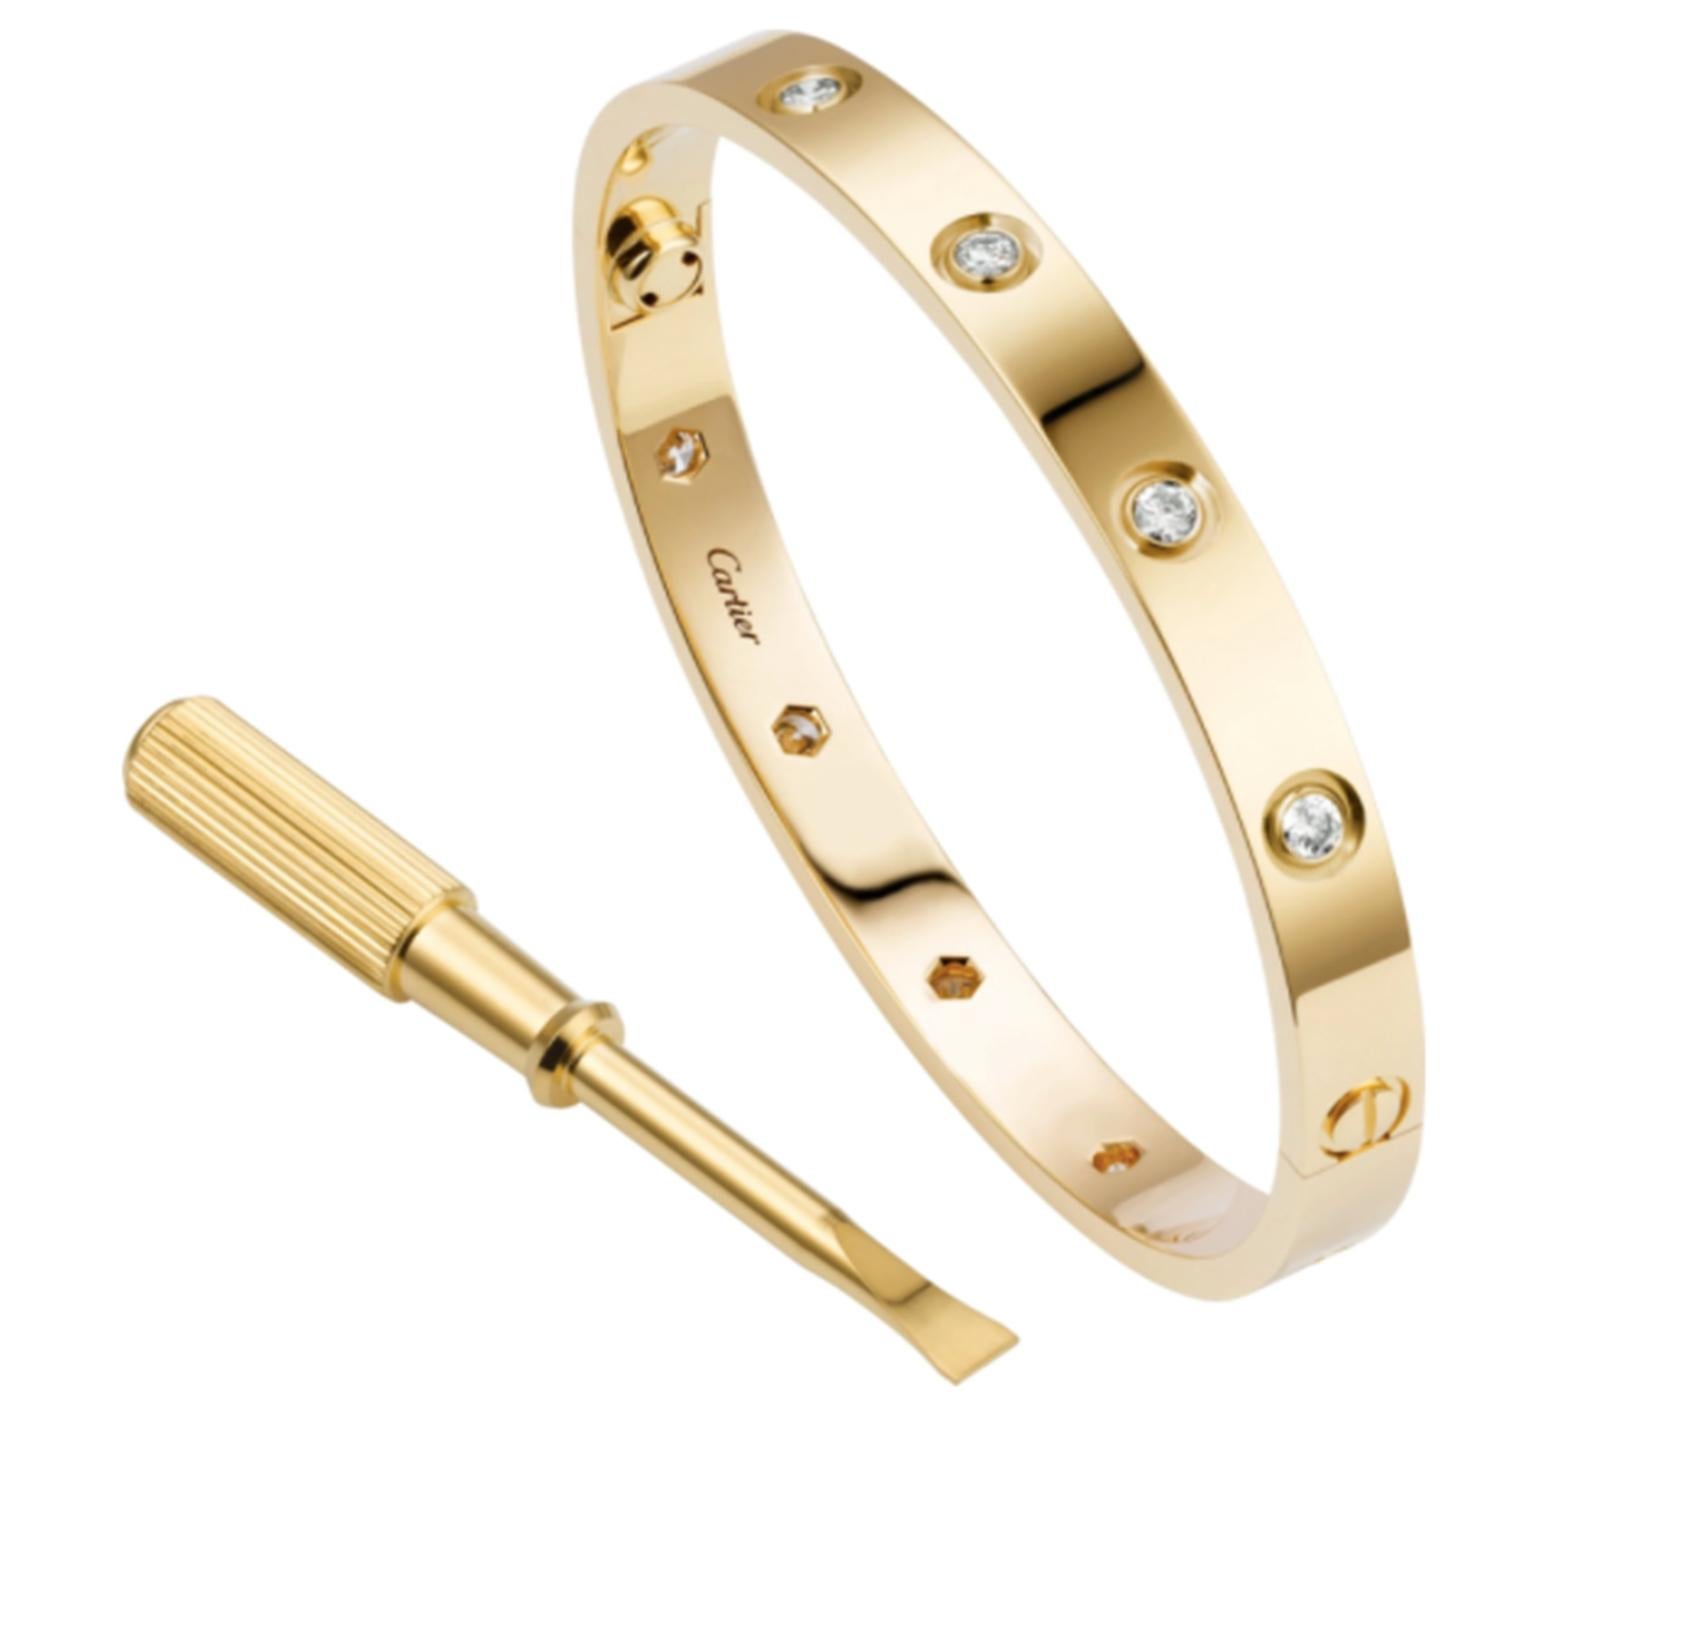 Designer: Cartier

Collection: Love

Style: Bangle Bracelet

Metal: Yellow Gold

​​​​​​​Metal Purity: 18k

Stone: Round Brilliant Cut Diamonds

Total Carat Weight: 0.96 ct

Bracelet Size: 19 = 19 cm

Hallmarks: 19, Au750 Cartier, Serial